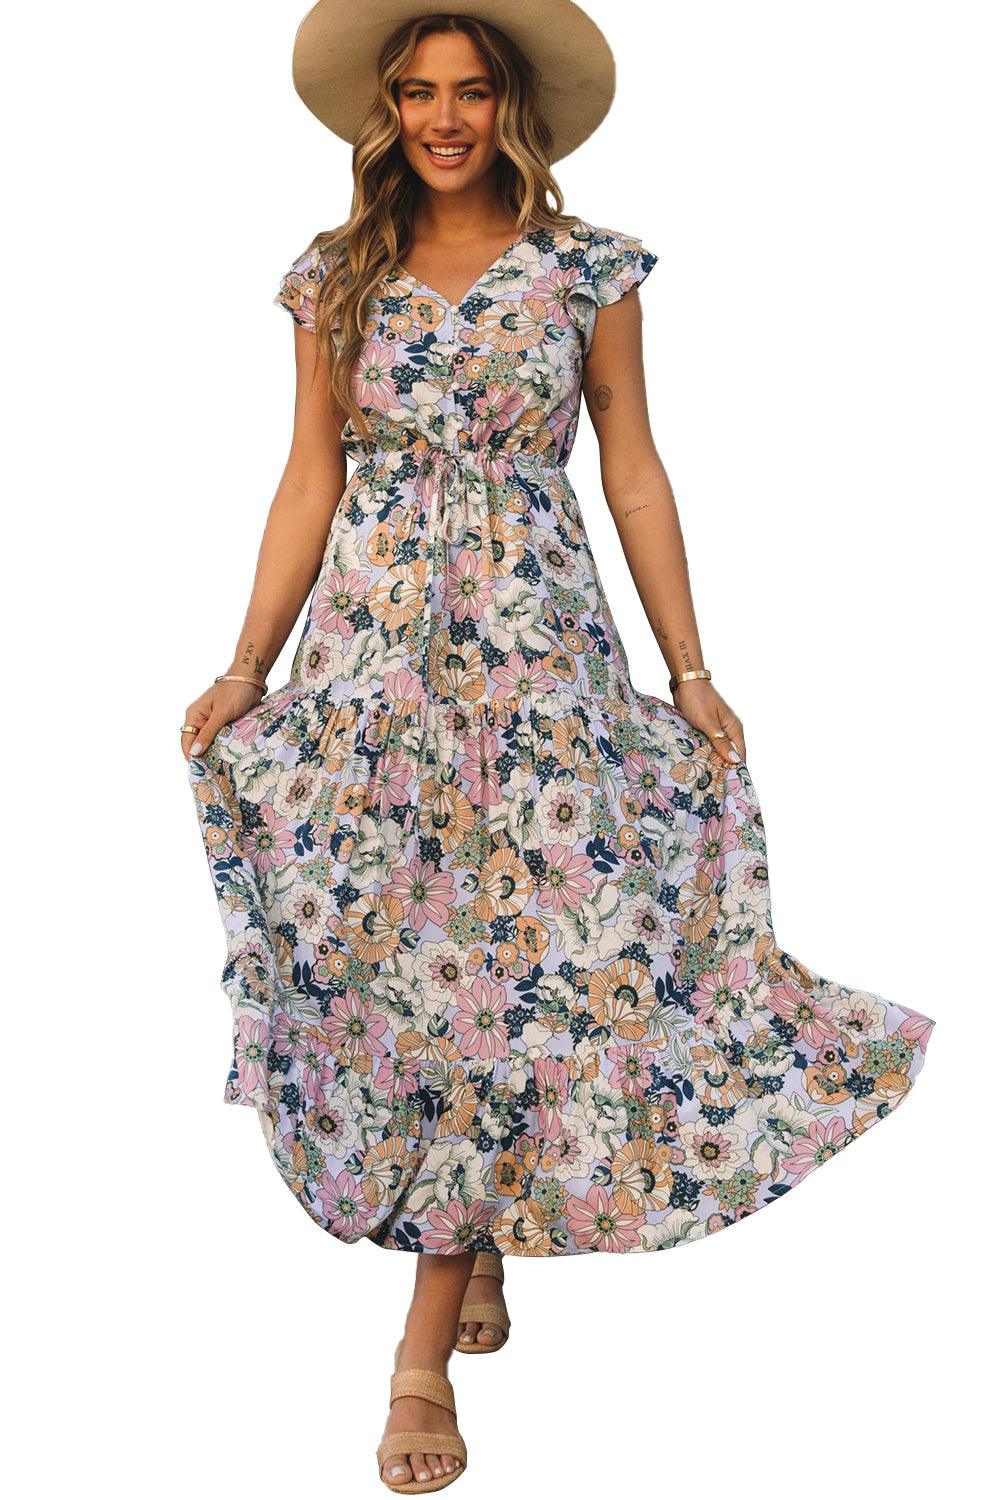 Layered Ruffle Sleeves Long Floral Dress - L & M Kee, LLC